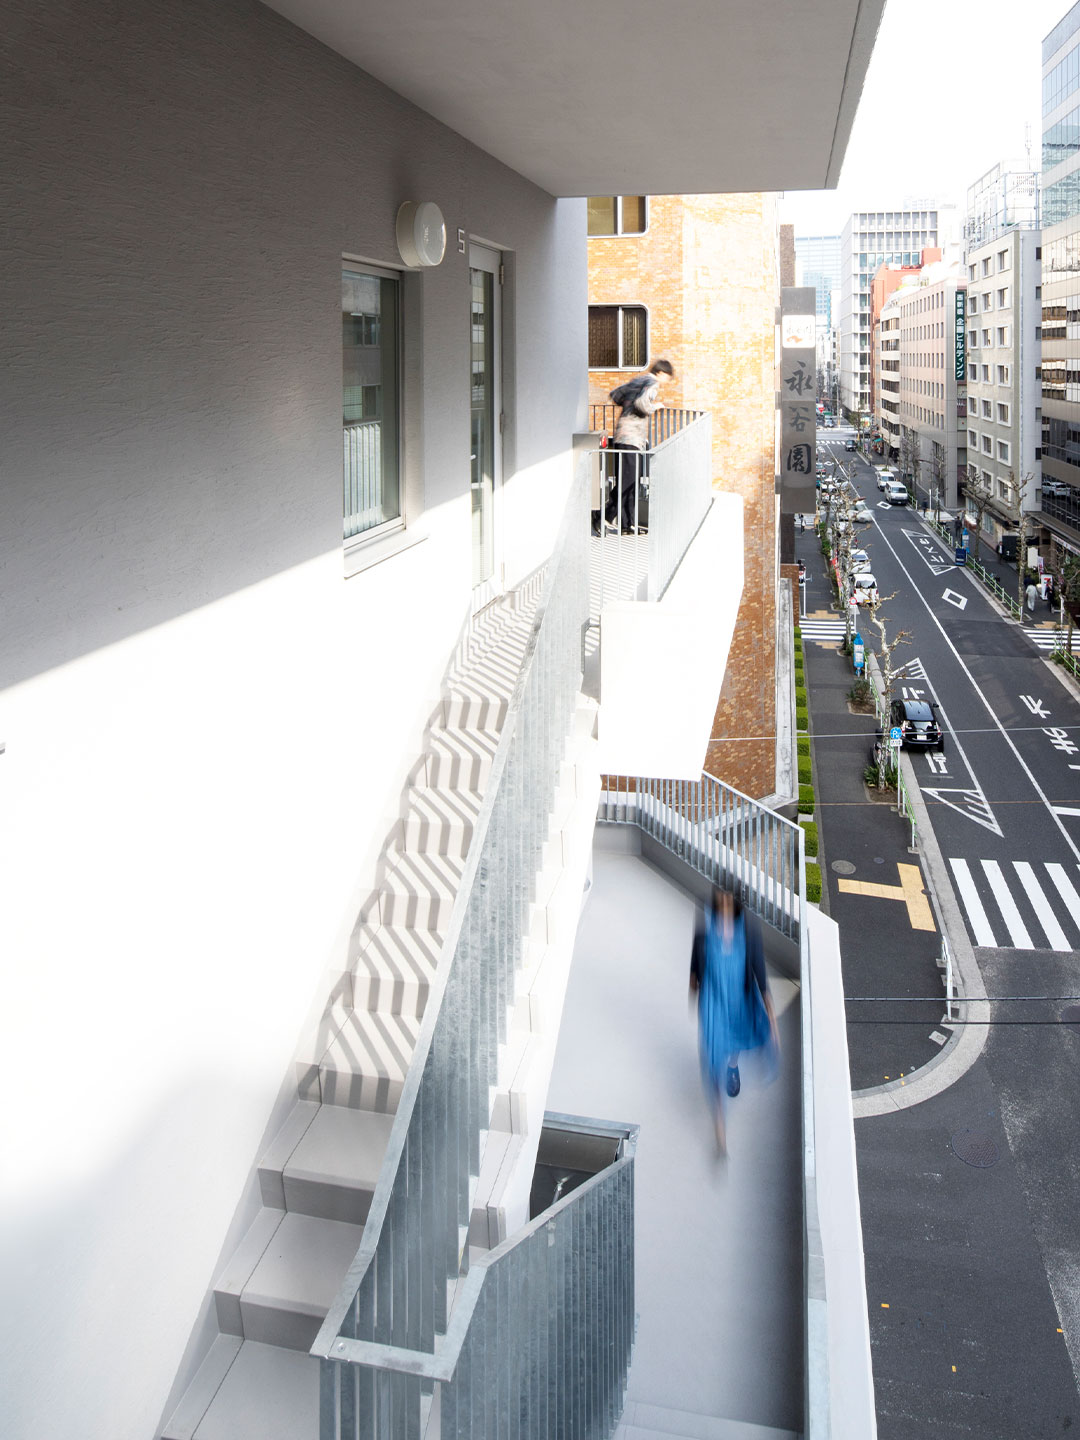 An exterior view at the Arakawa building in Tokyo